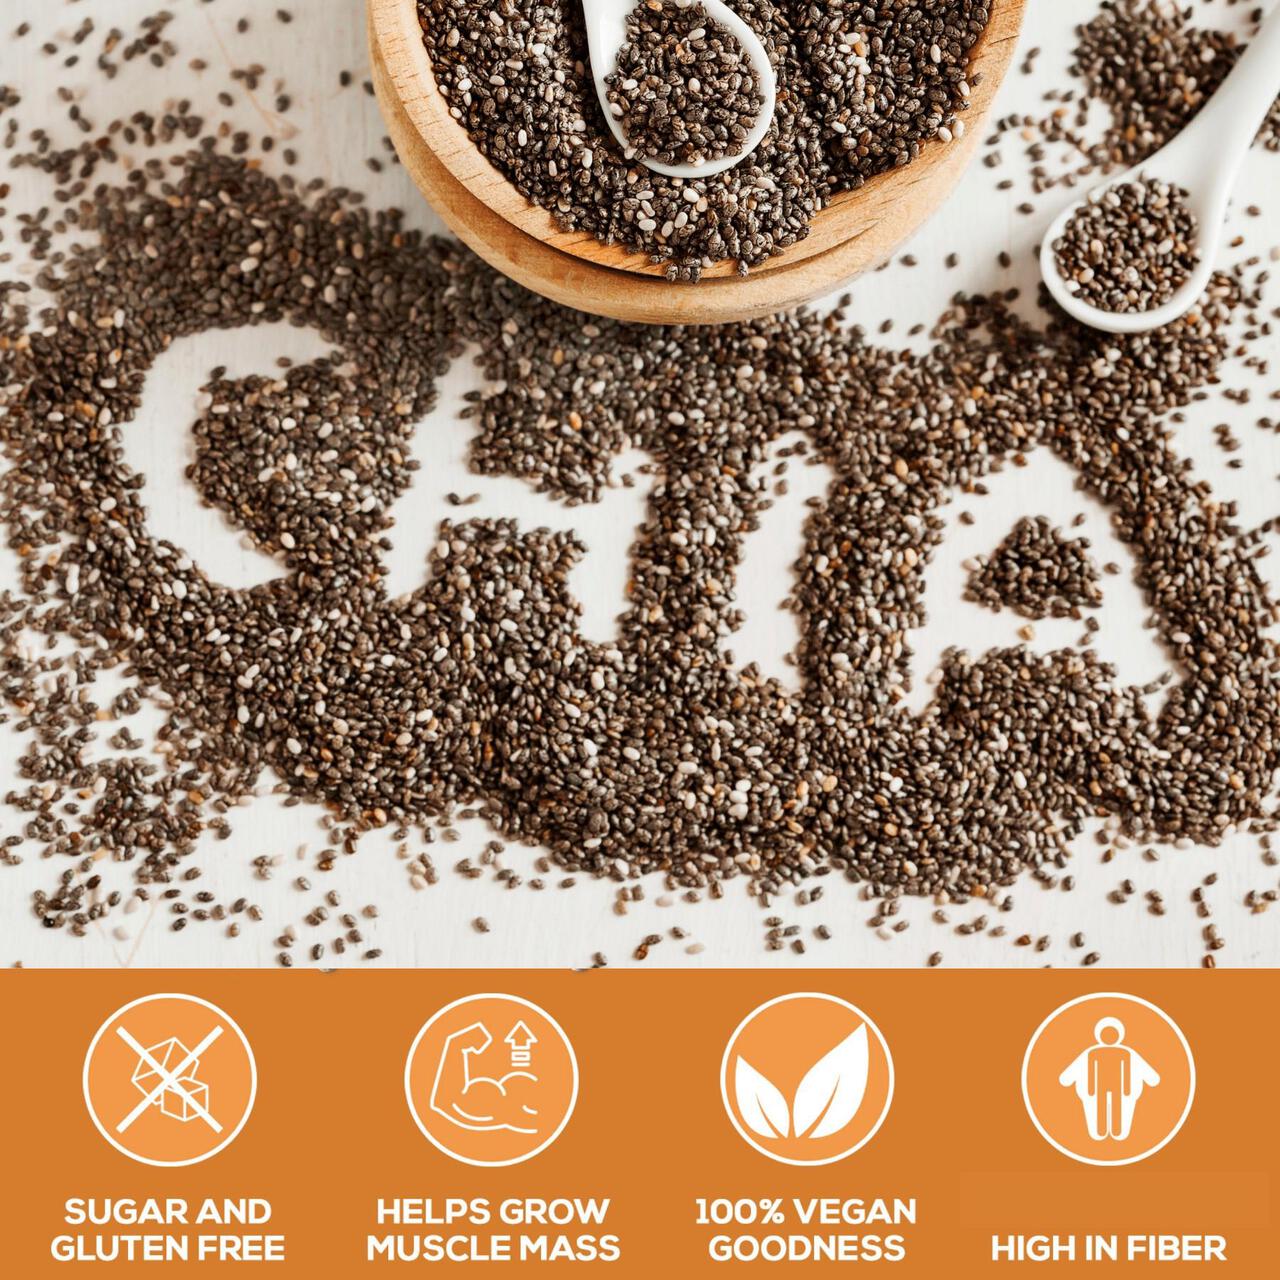 Chia Charge Chia Seeds 450g